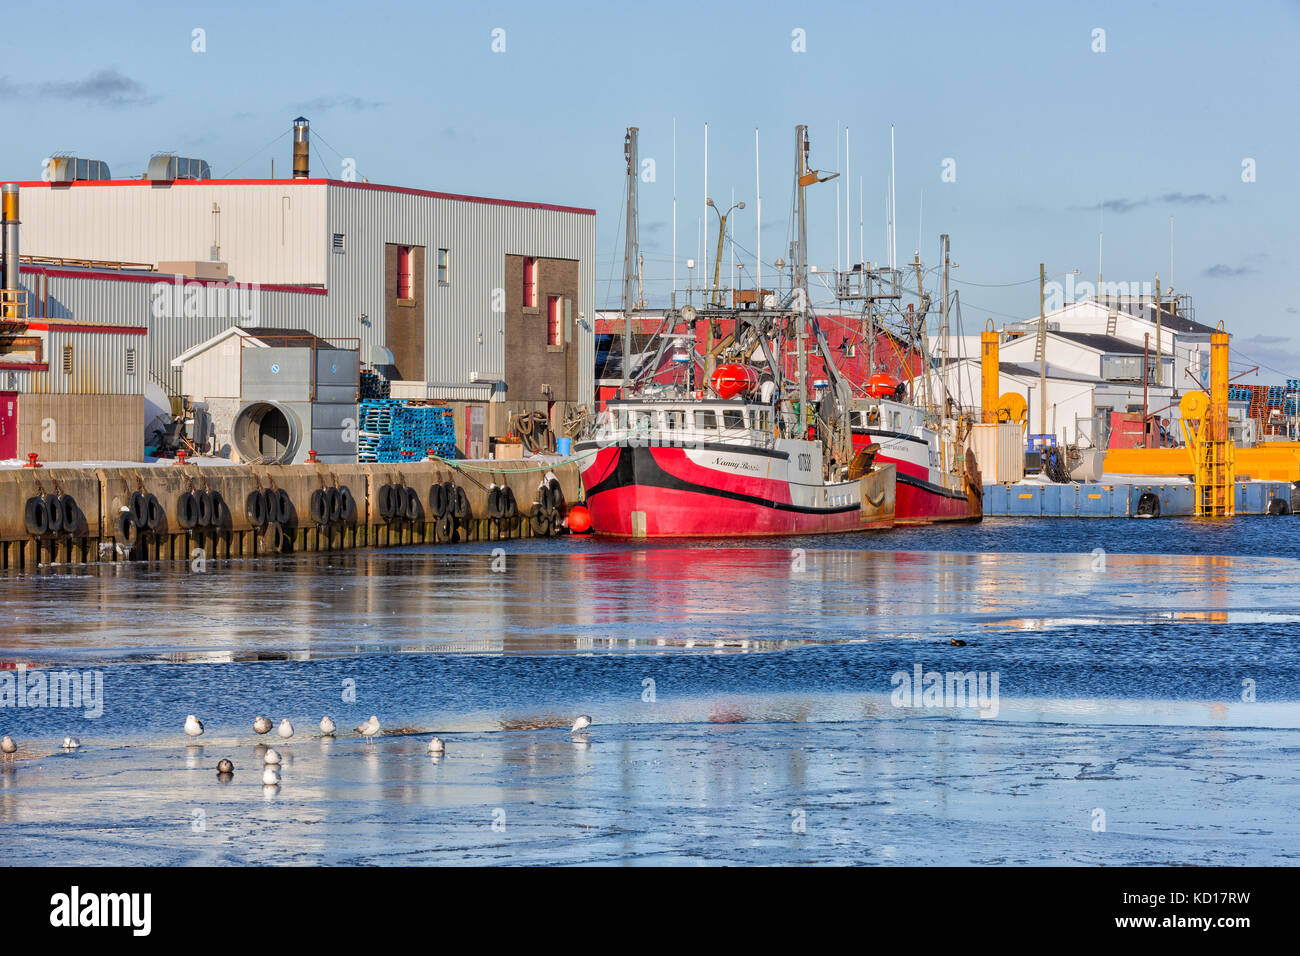 Les bateaux de pêche amarrés au quai en hiver, Glace Bay, Nova Scotia, canada Banque D'Images